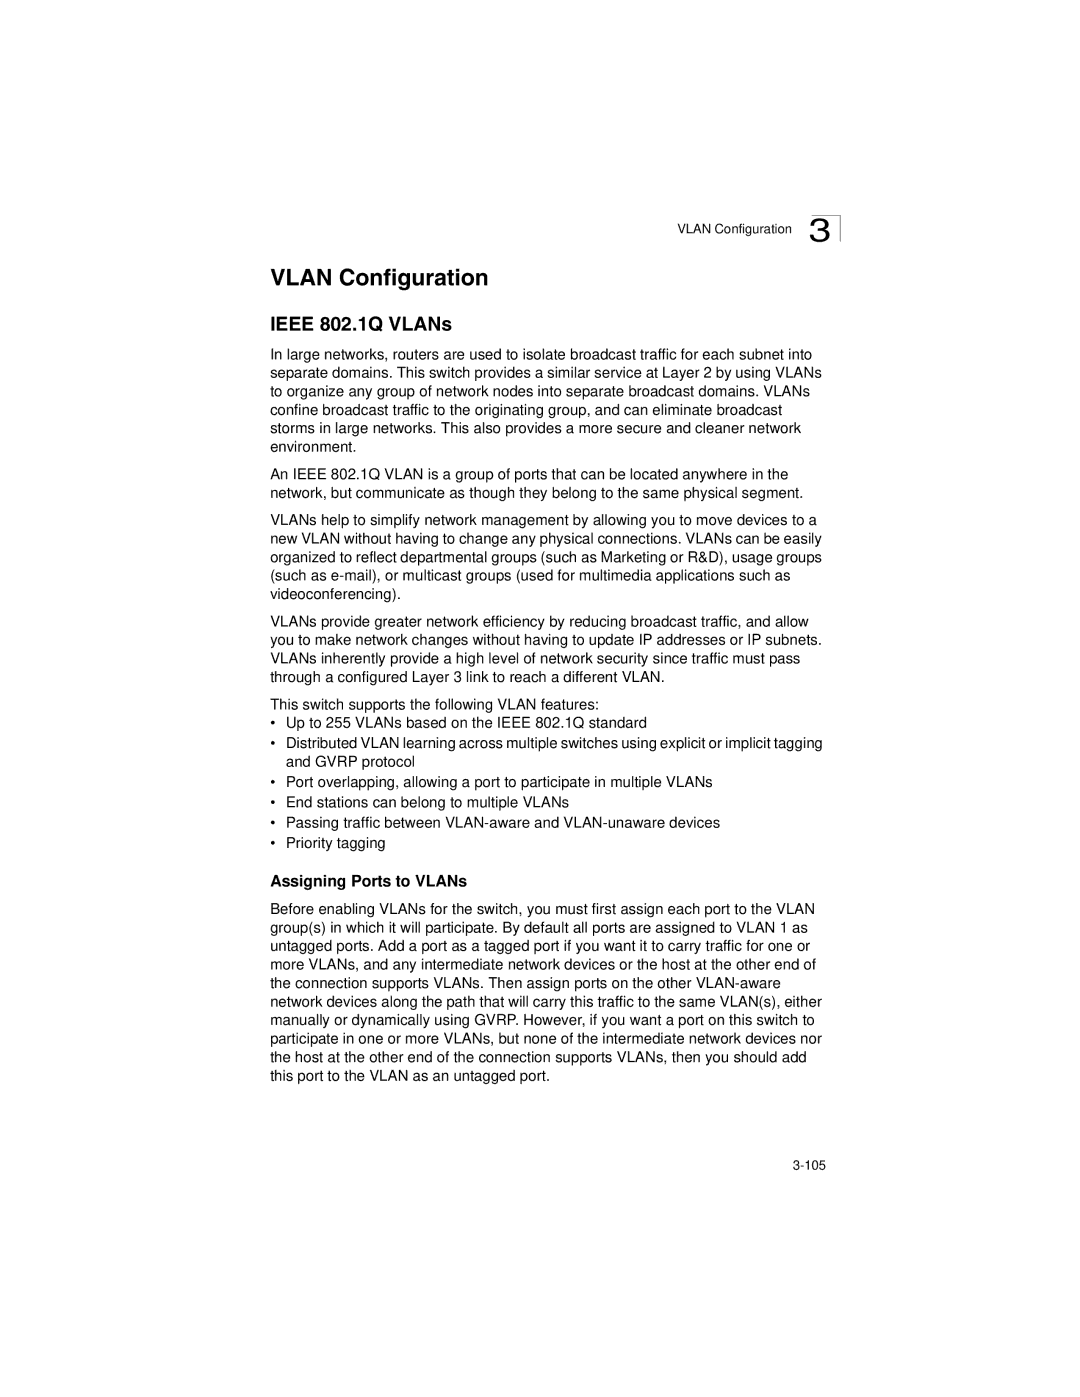 LevelOne GSW-2692 manual Vlan Configuration, Ieee 802.1Q VLANs 